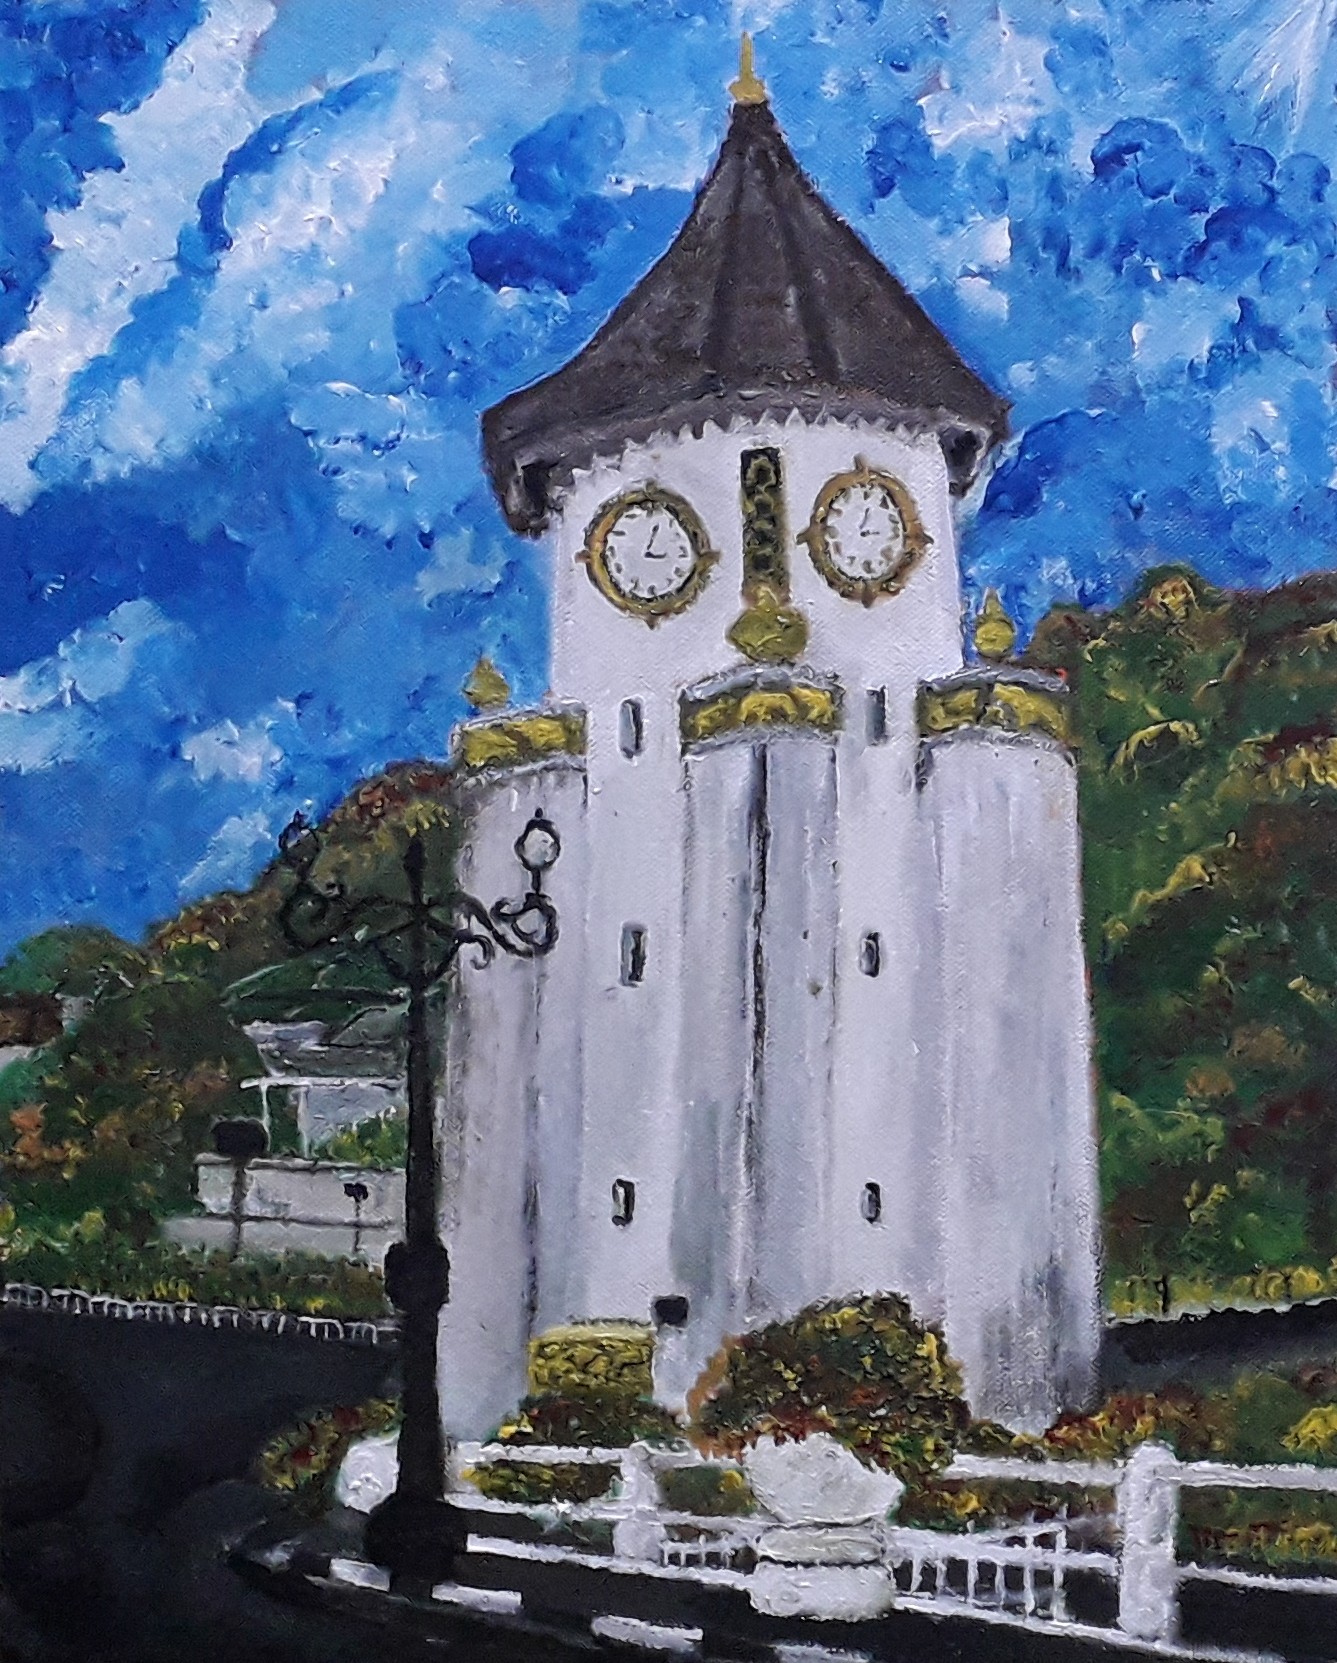 Kandy Clock Tower by Simpson David